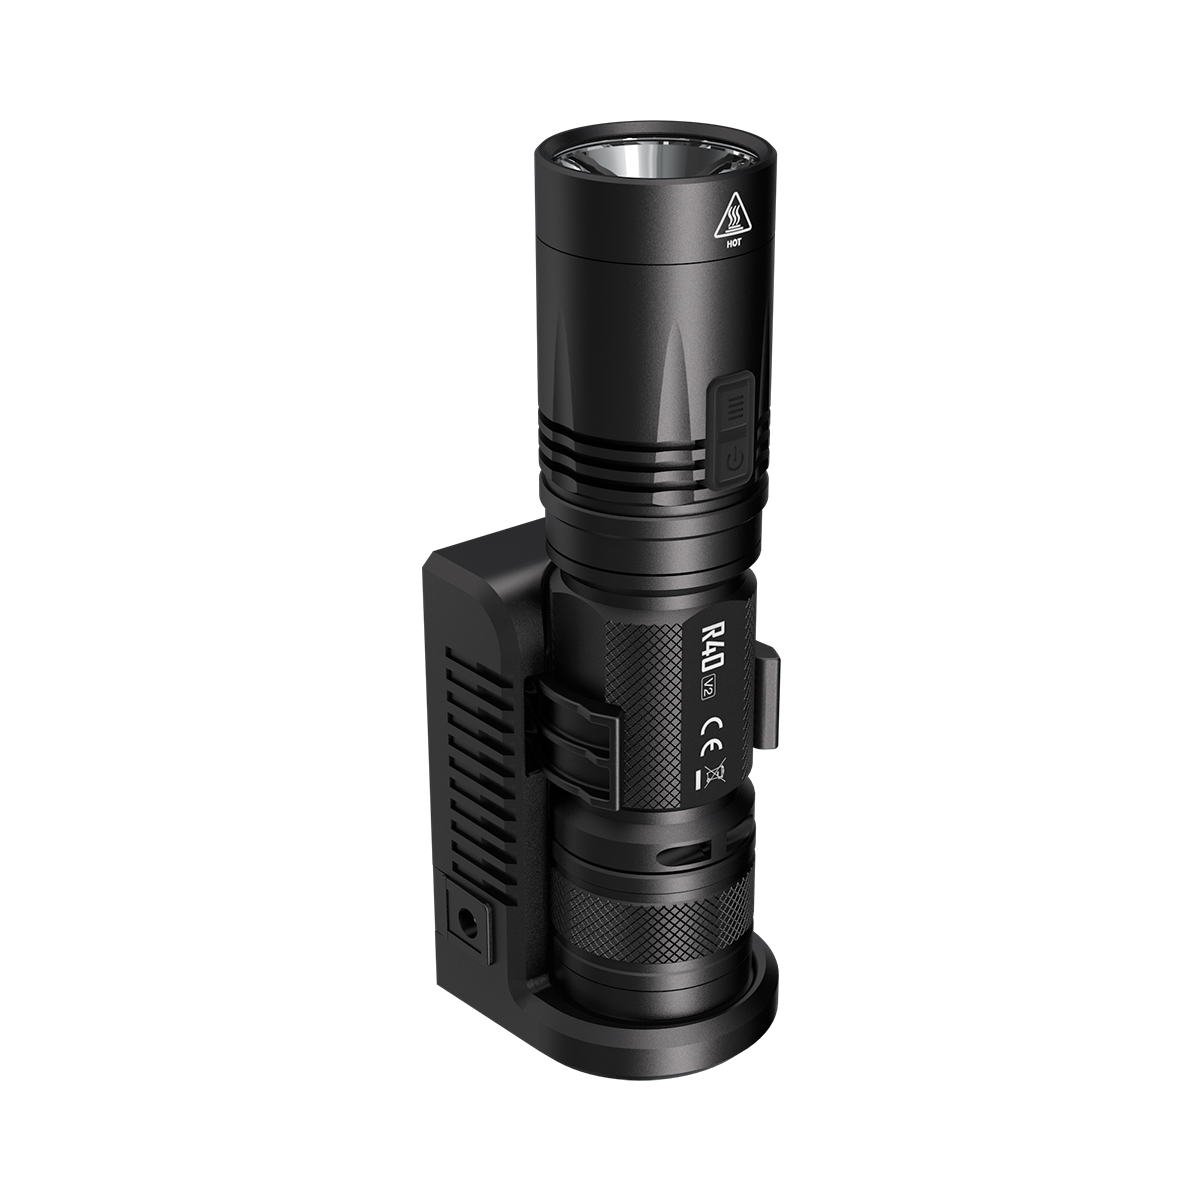 Nitecore R40 V2  XP-L HI V3 LED 1000 Lumens With Charging Docks EDC Flashlight